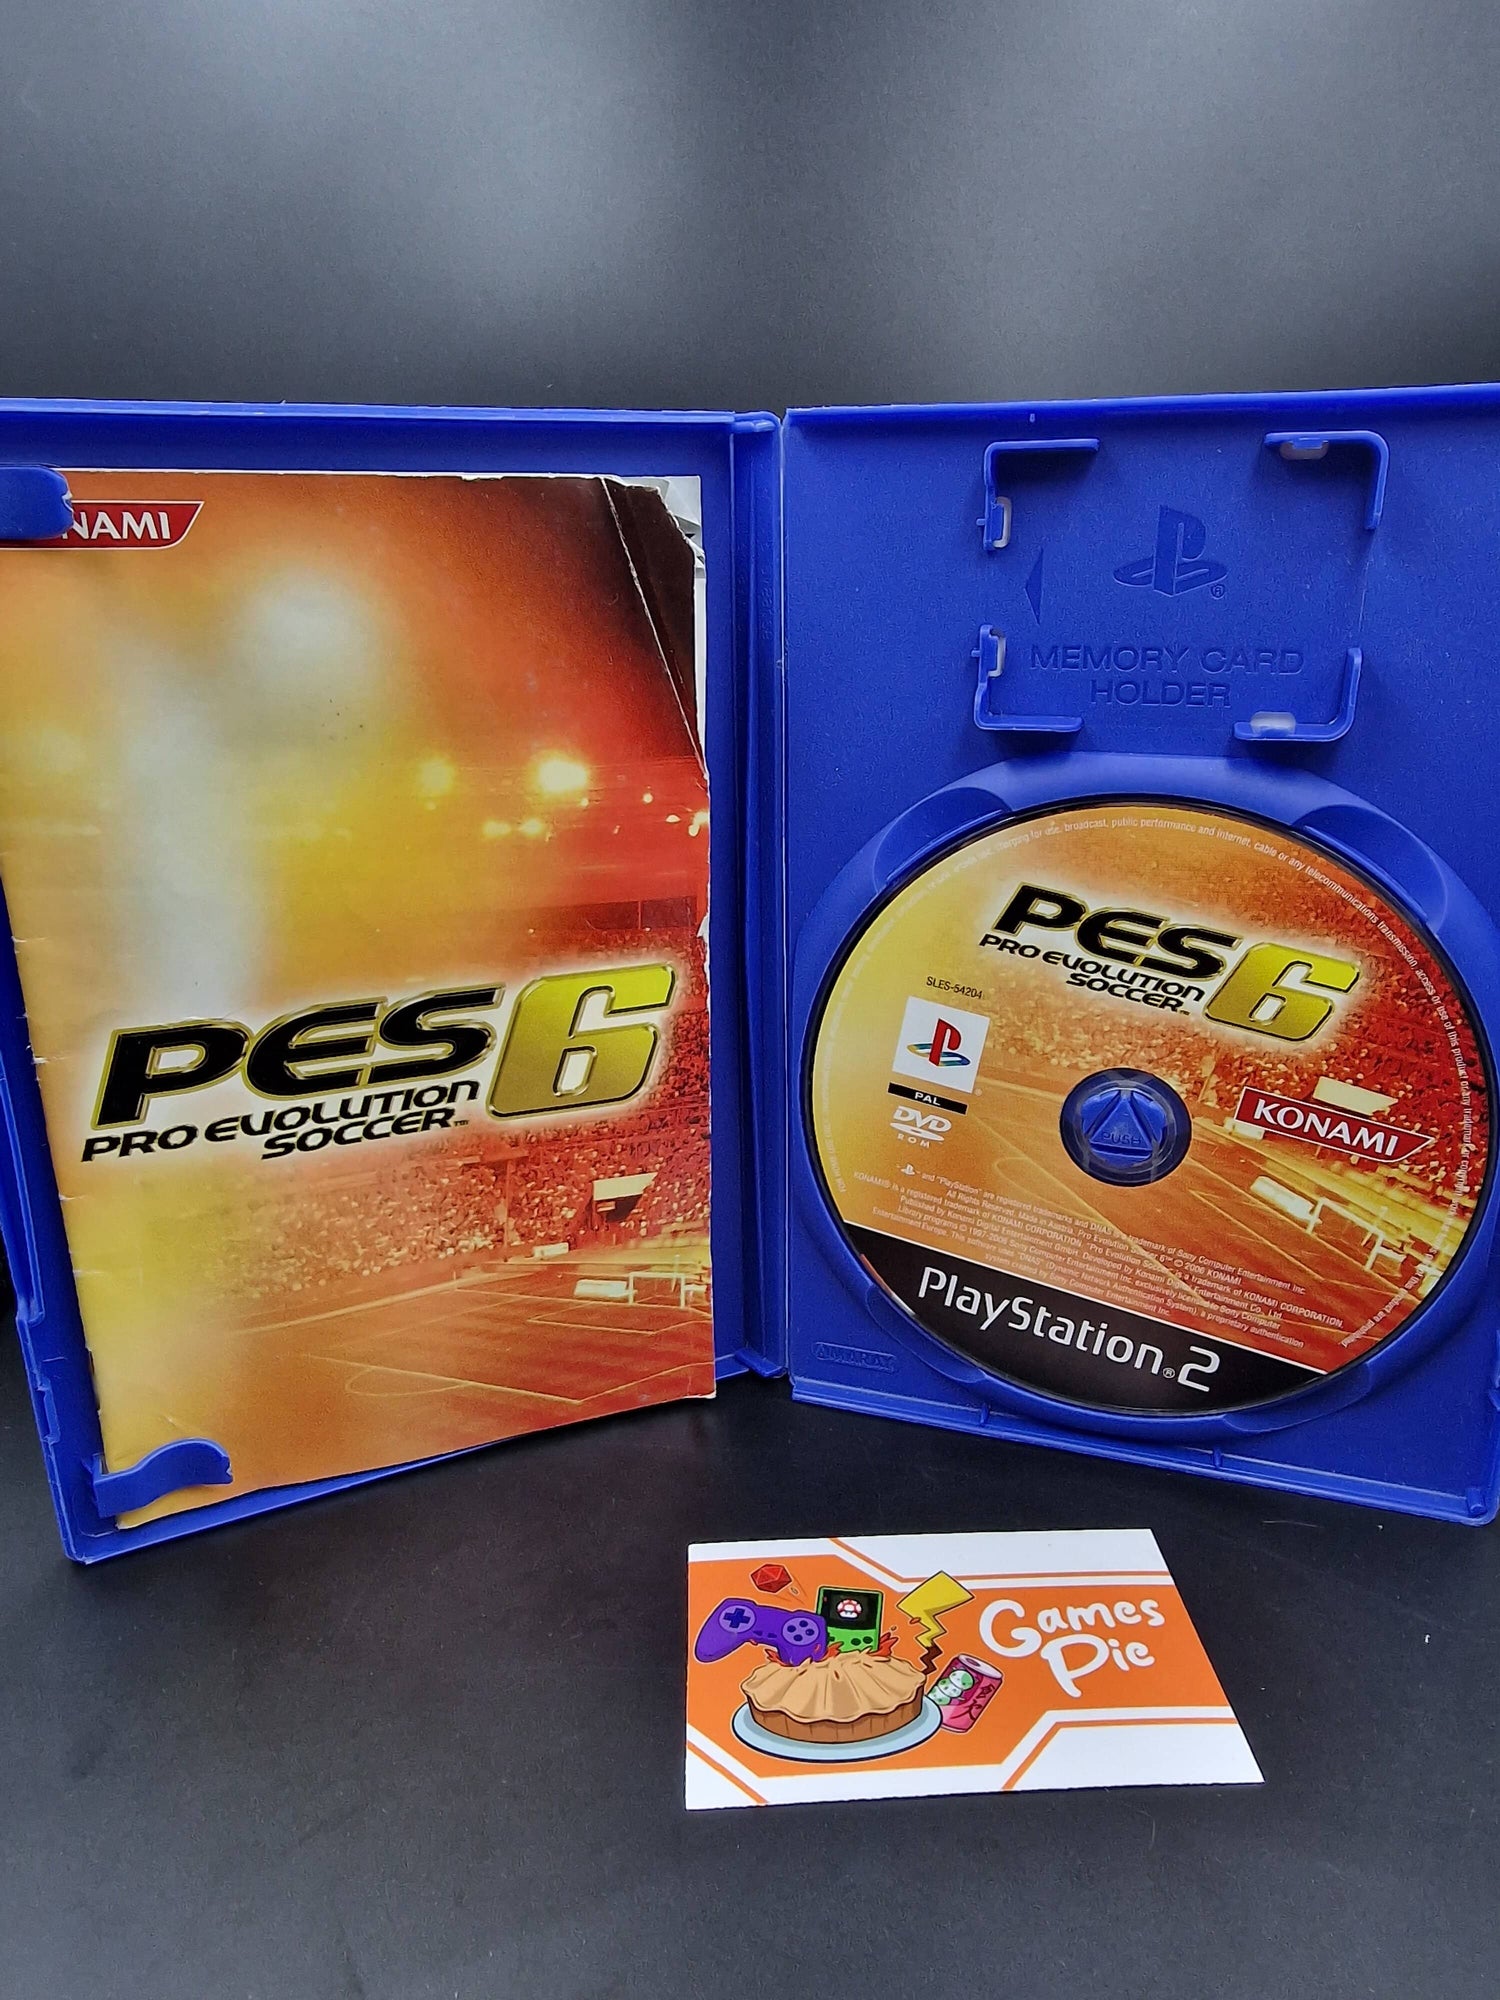 Pro Evolution Soccer 6 Playstation 2